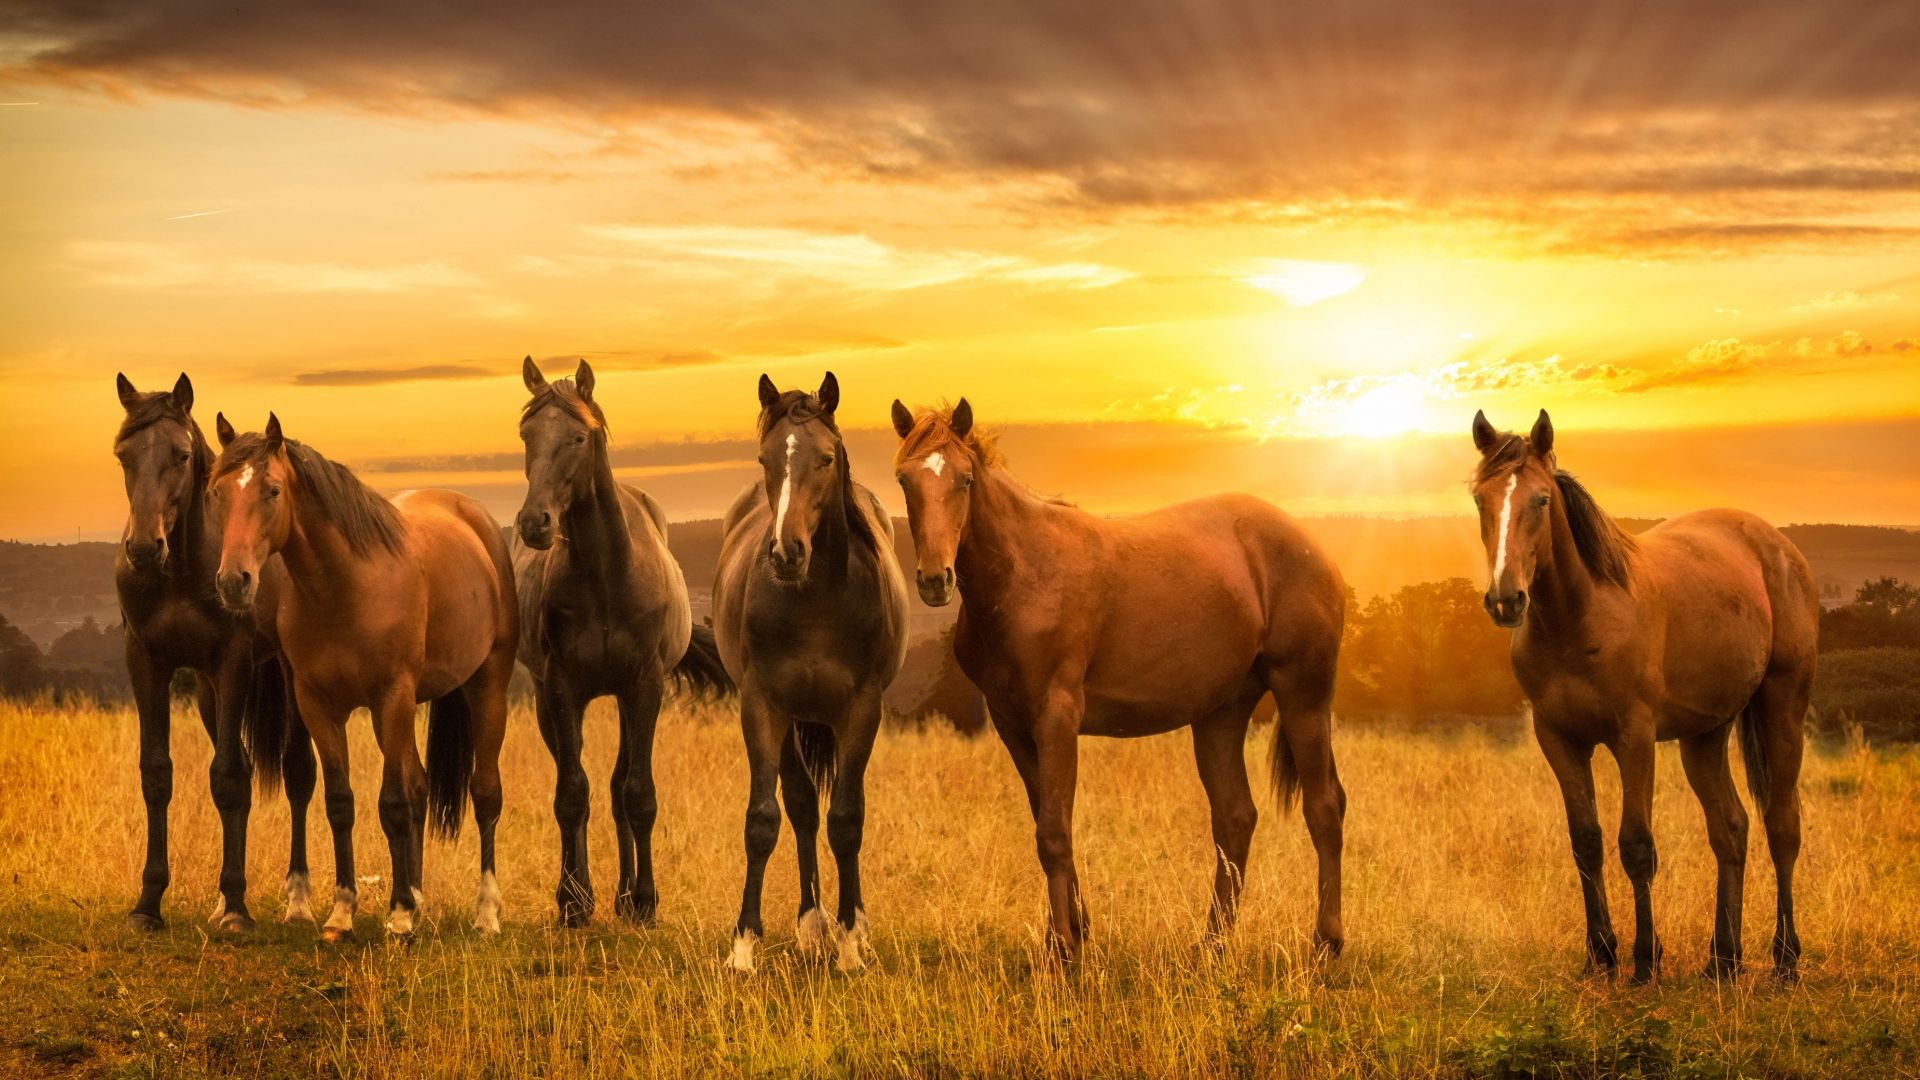 Horses, herd, sunset, landscape wallpaper, HD image, picture, background, 064944